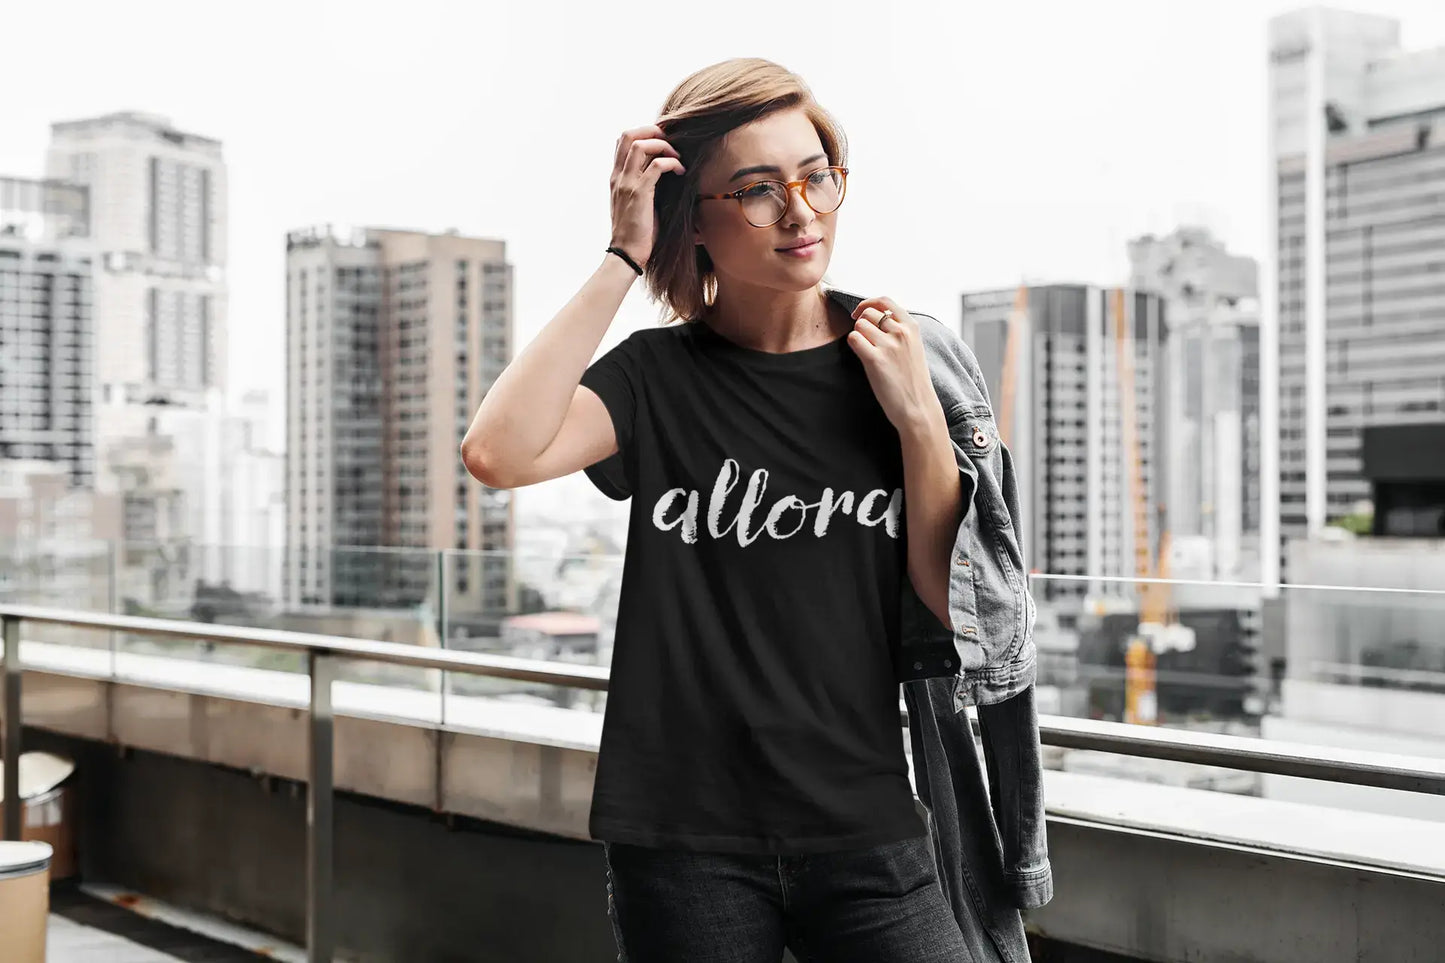 ULTRABASIC - Women's Low-Cut Round Neck T-Shirt Allora T-Shirt Grey Marl